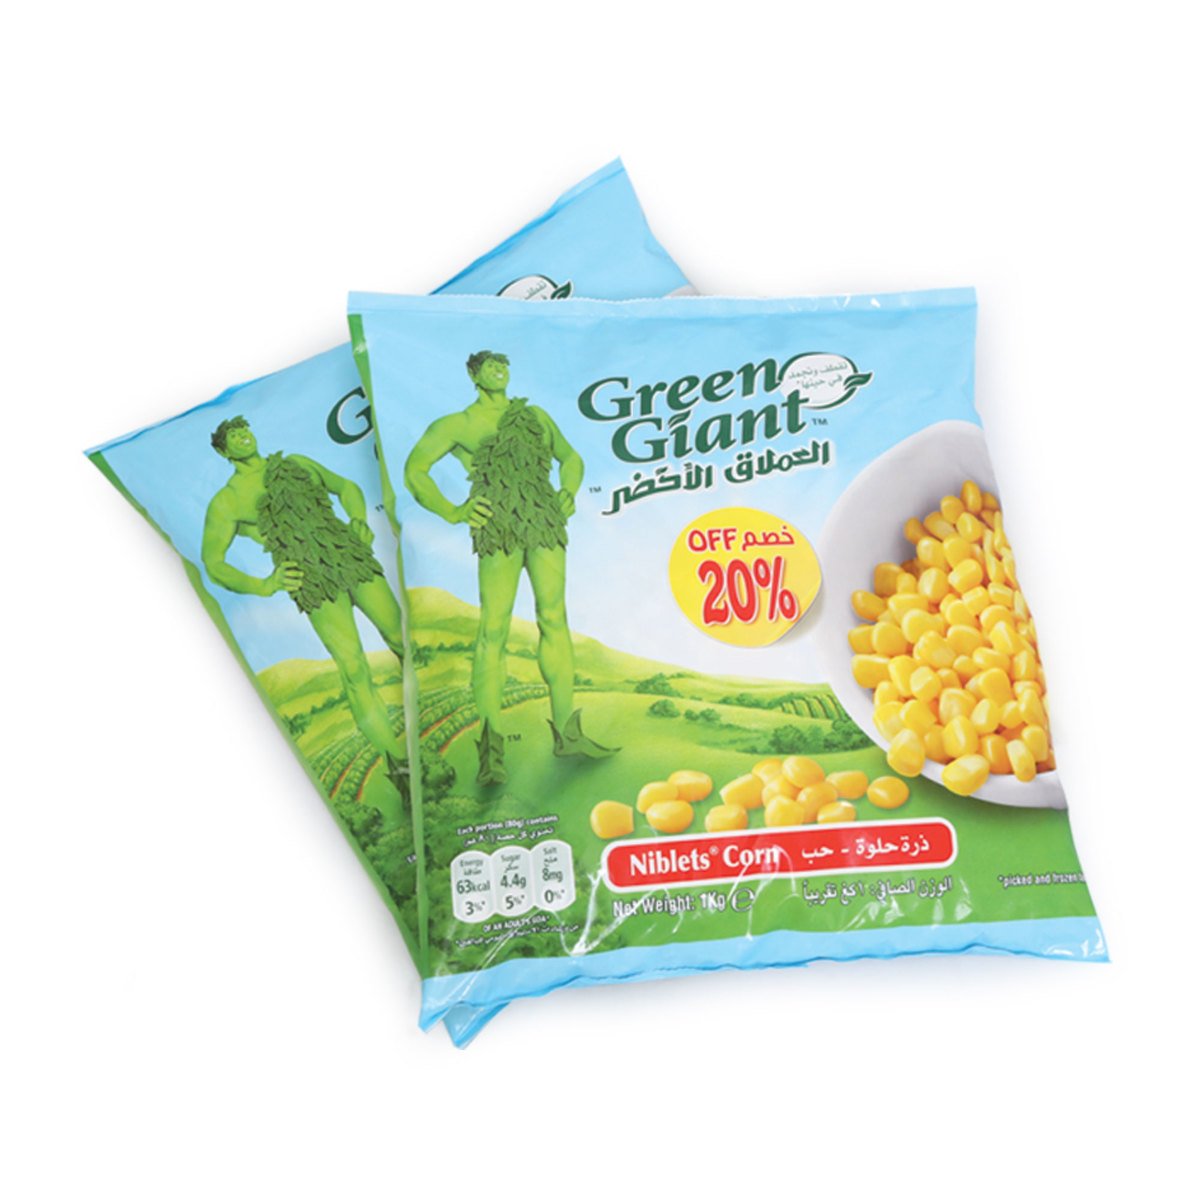 Green Giant Niblets Corn 2 x 1 kg